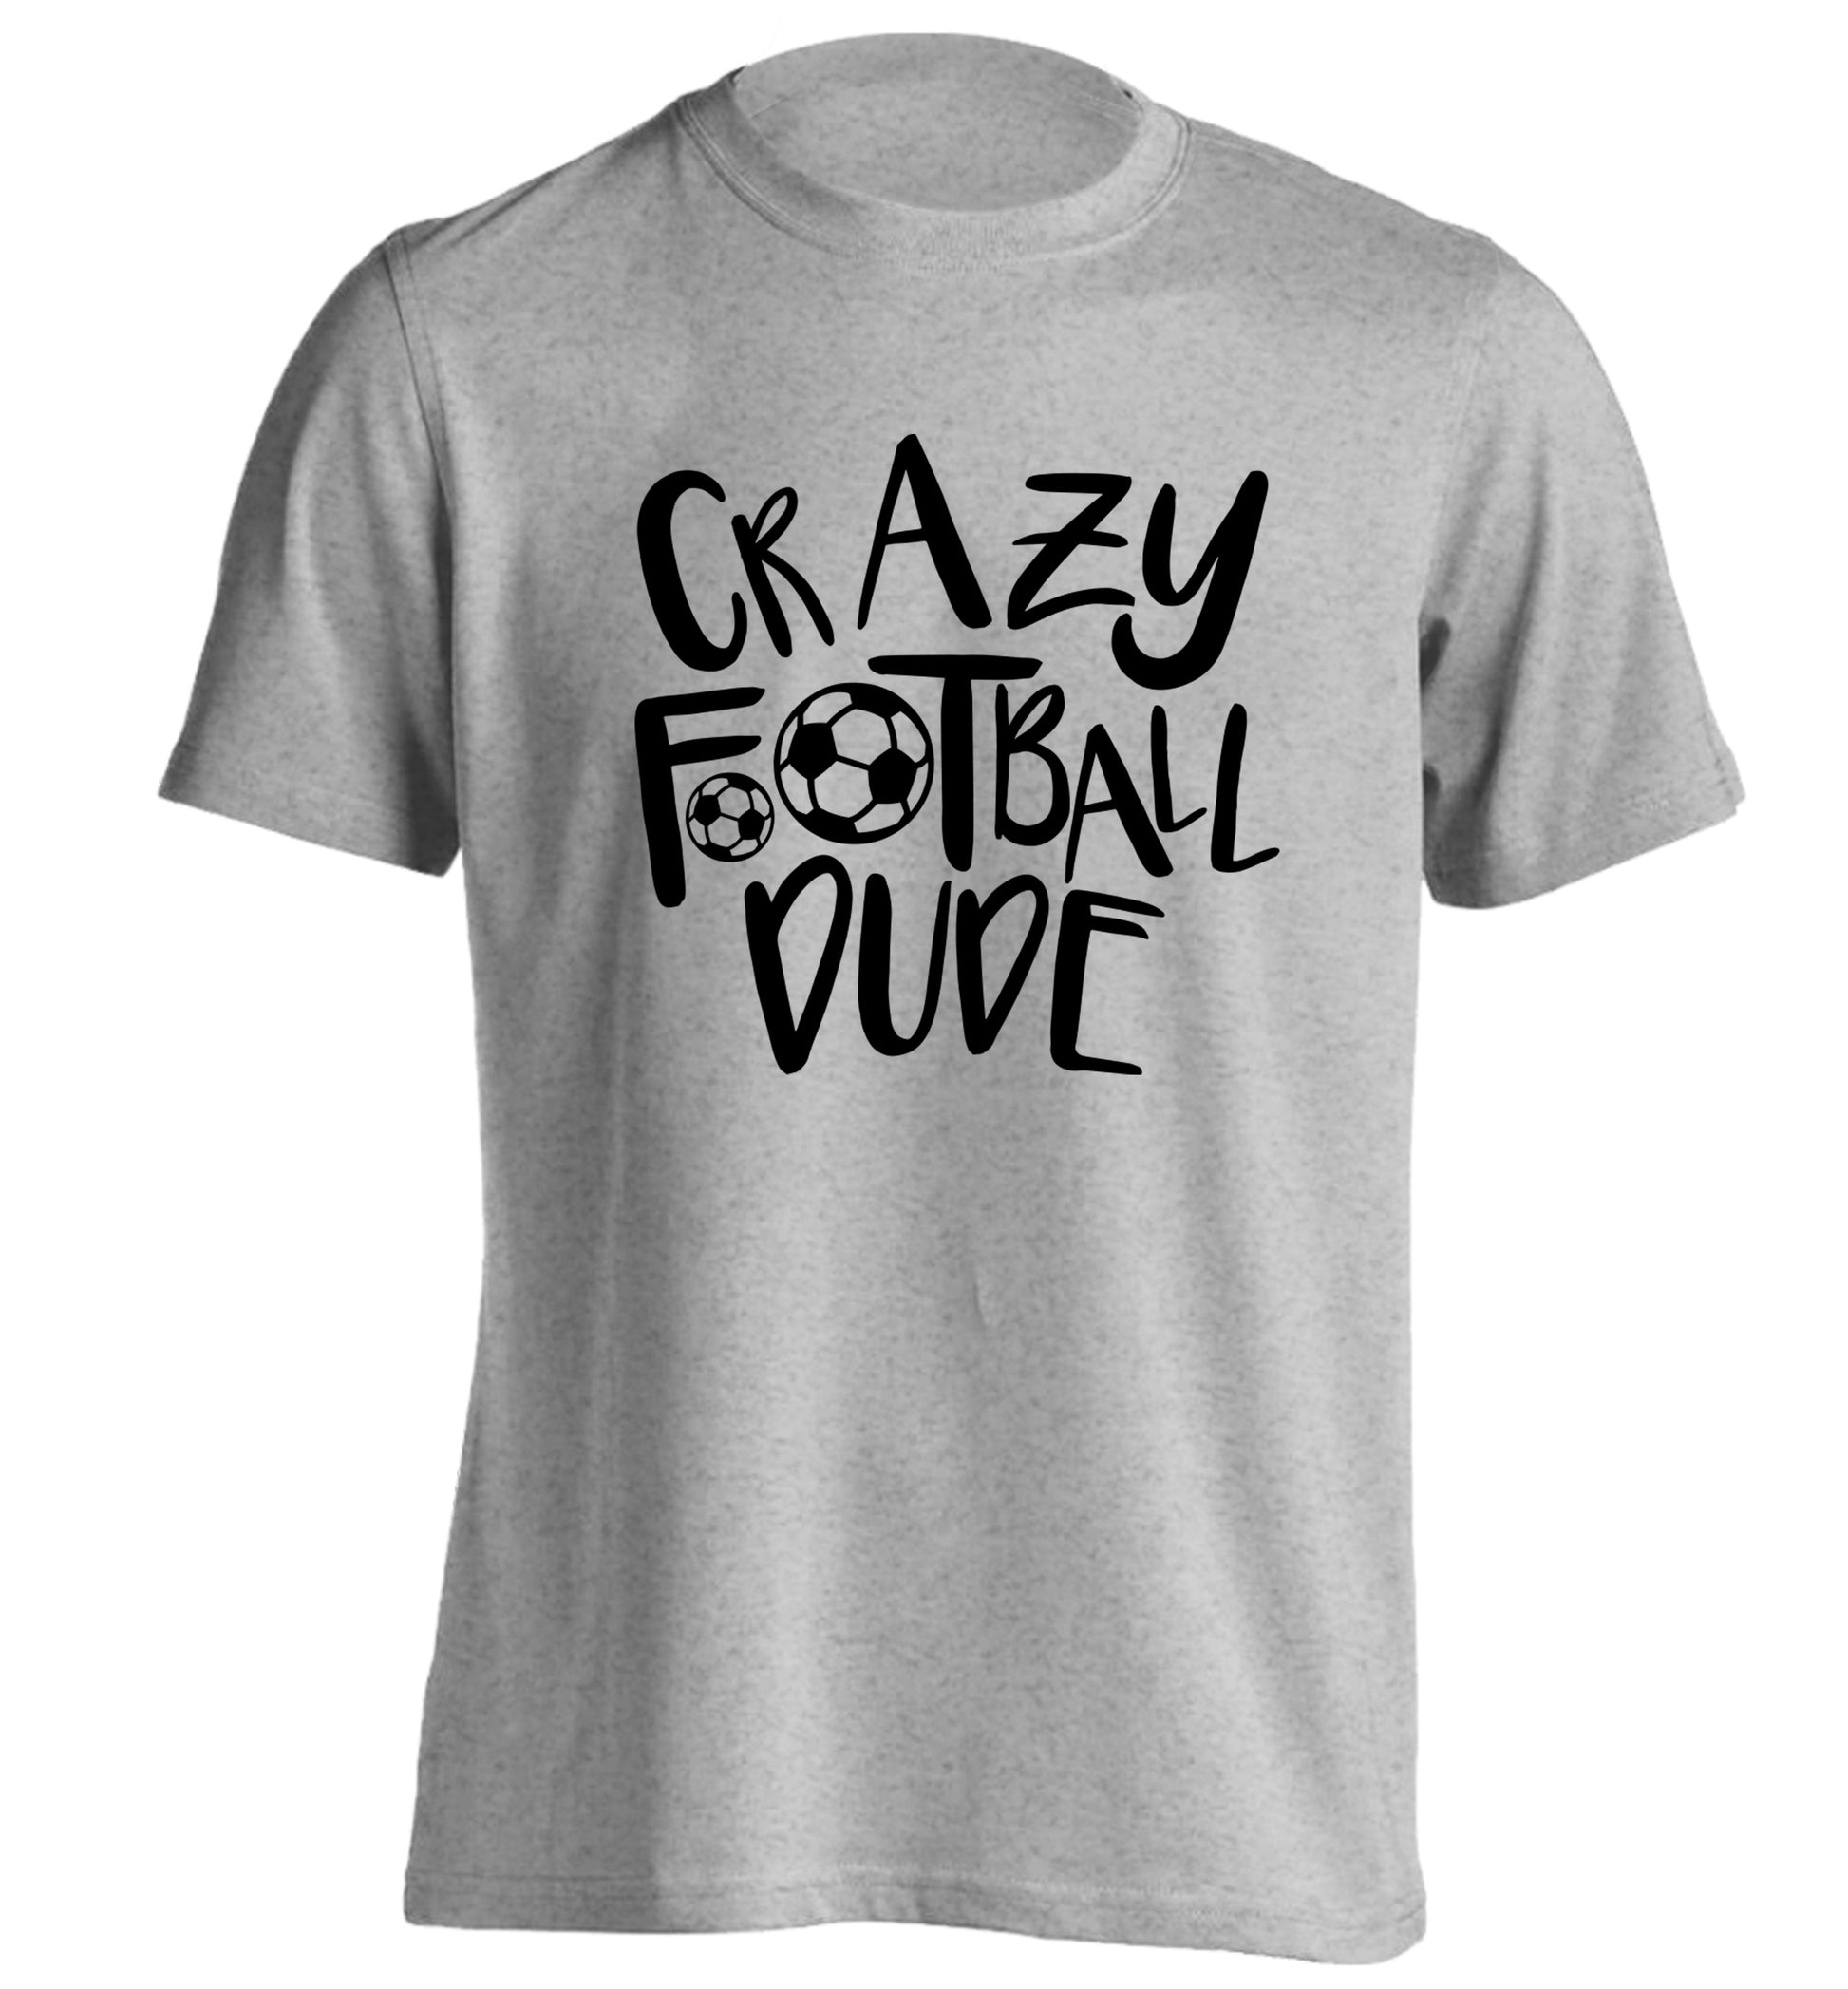 Crazy football dude adults unisexgrey Tshirt 2XL